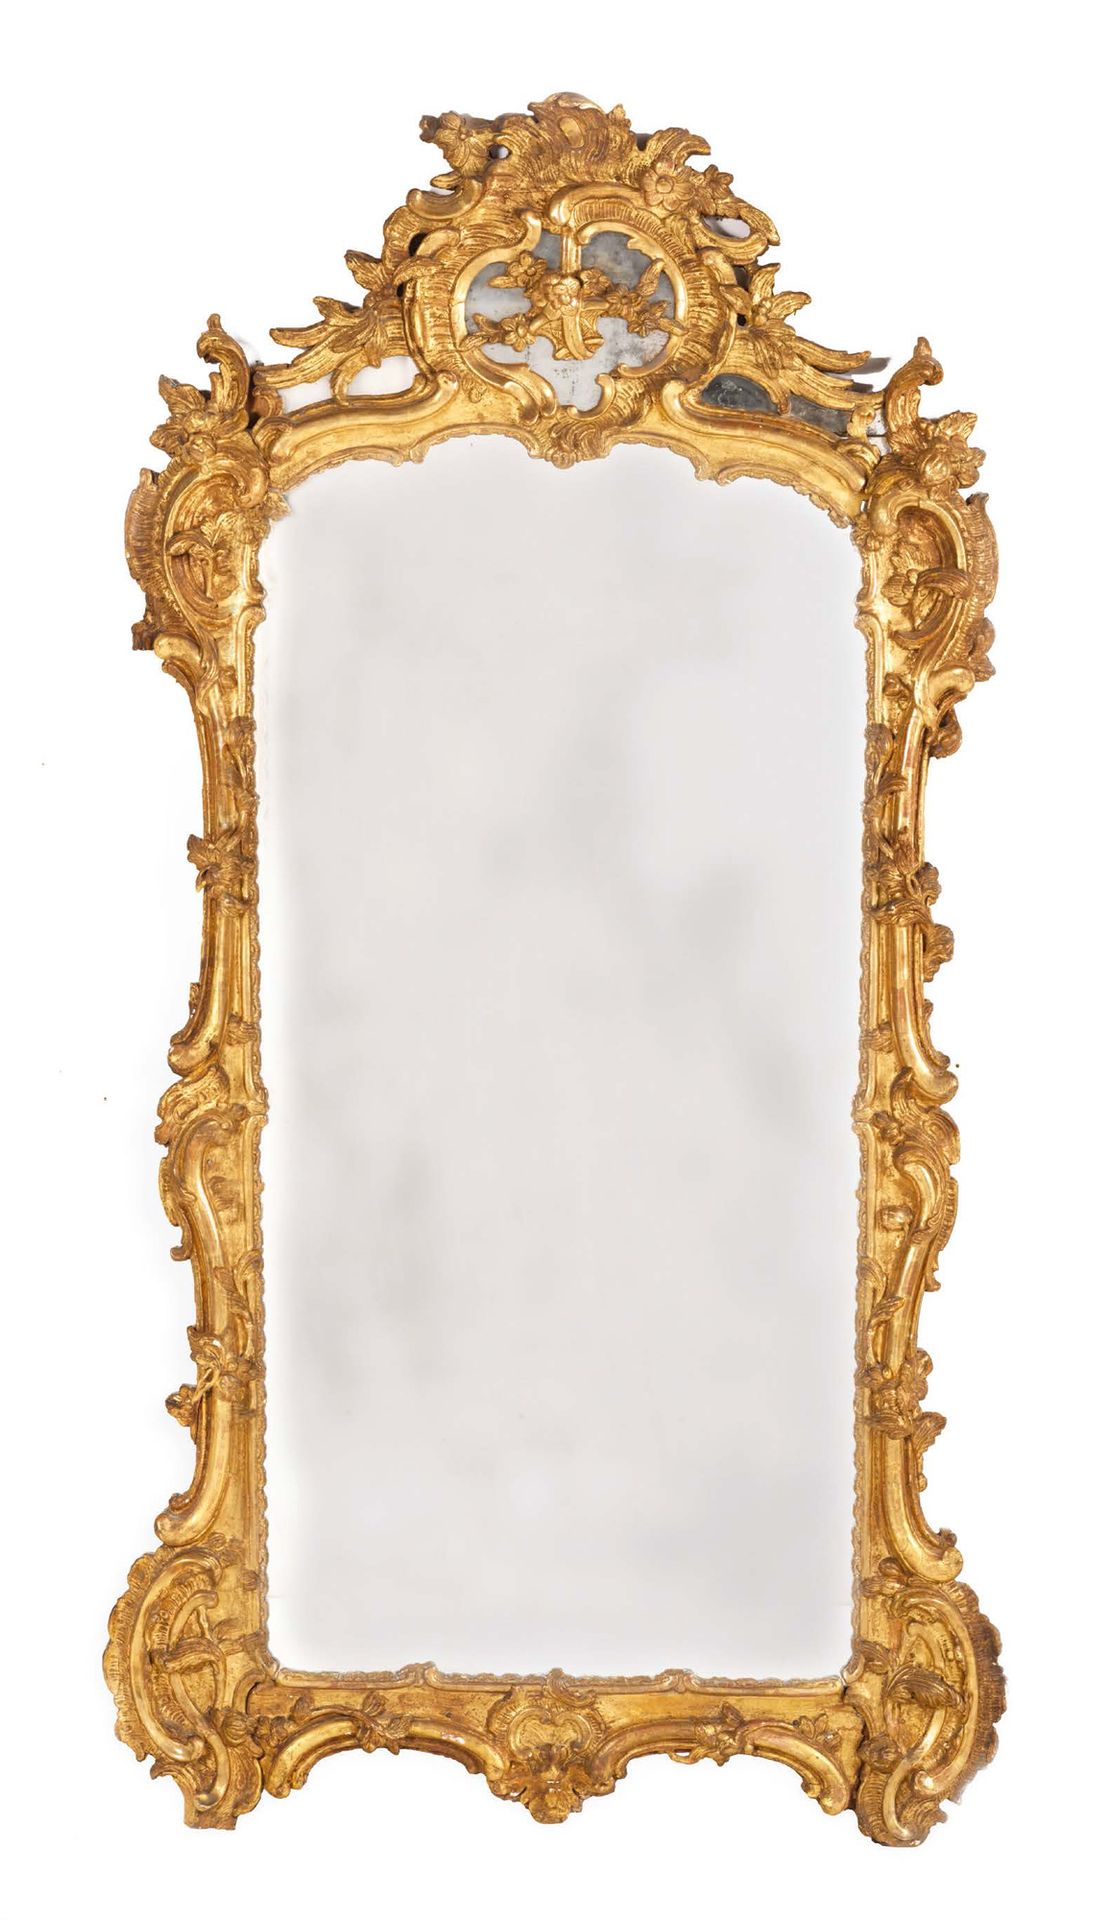 Null 一面富于雕刻和镀金的木镜。
18世纪（镜子已被替换），模型上有镂空的踏板，装饰有皮革、扣子和镂空的刺绣。
H_185 cm W_85 cm